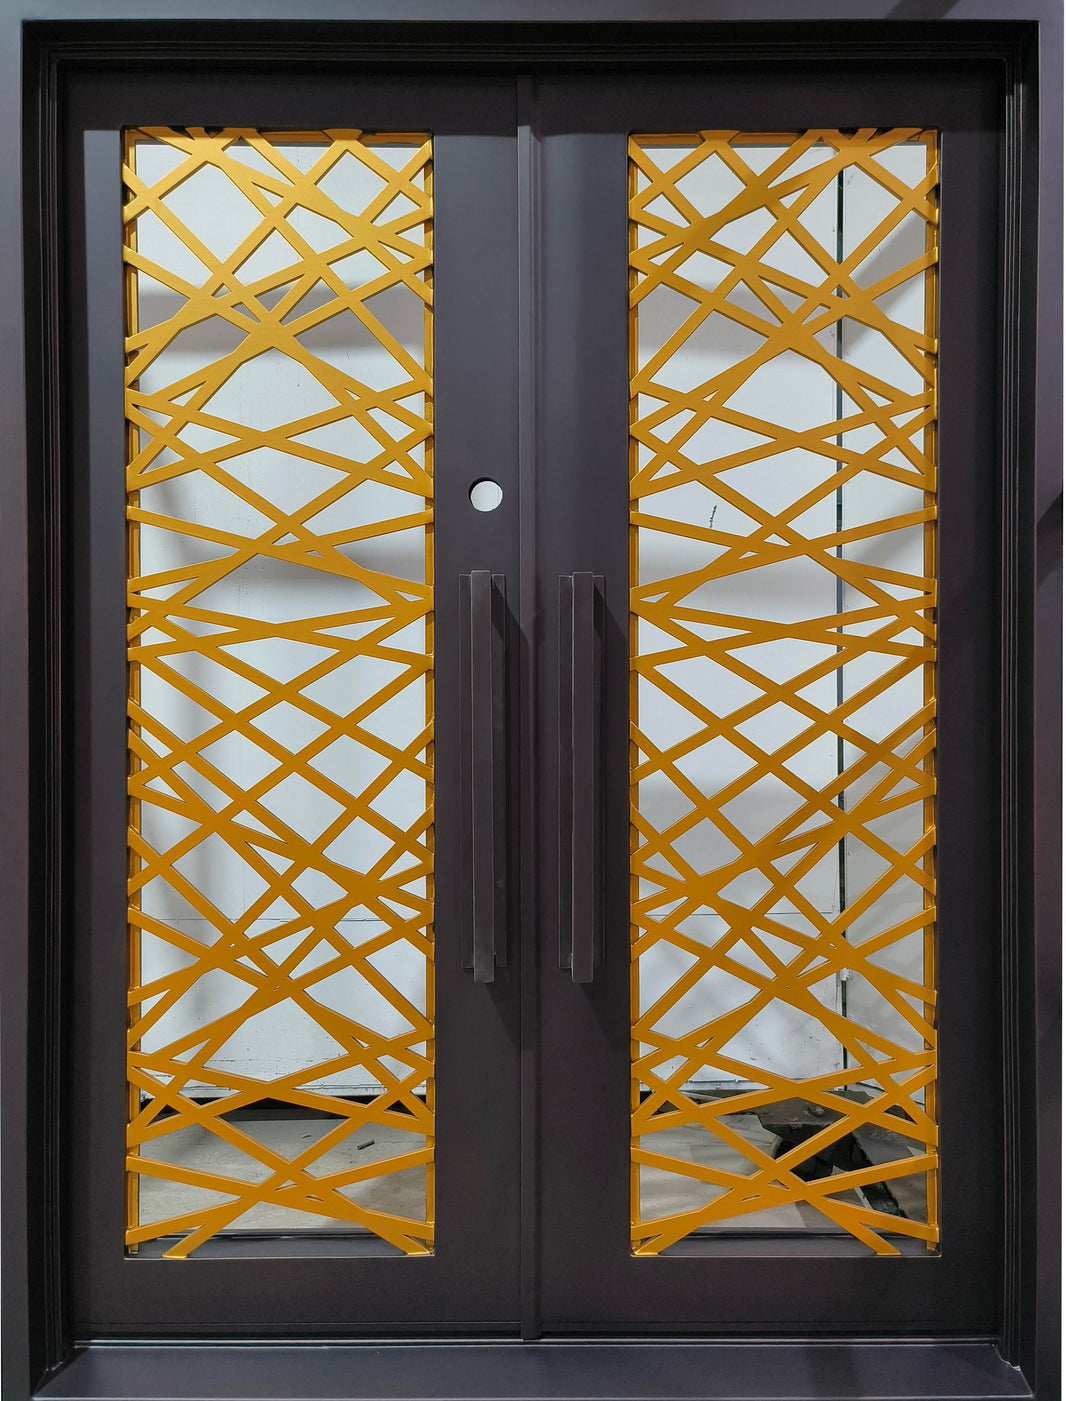 Wrought Iron Plasma Cut Iron Door | Square Top With kickplate | Model # IWD 973